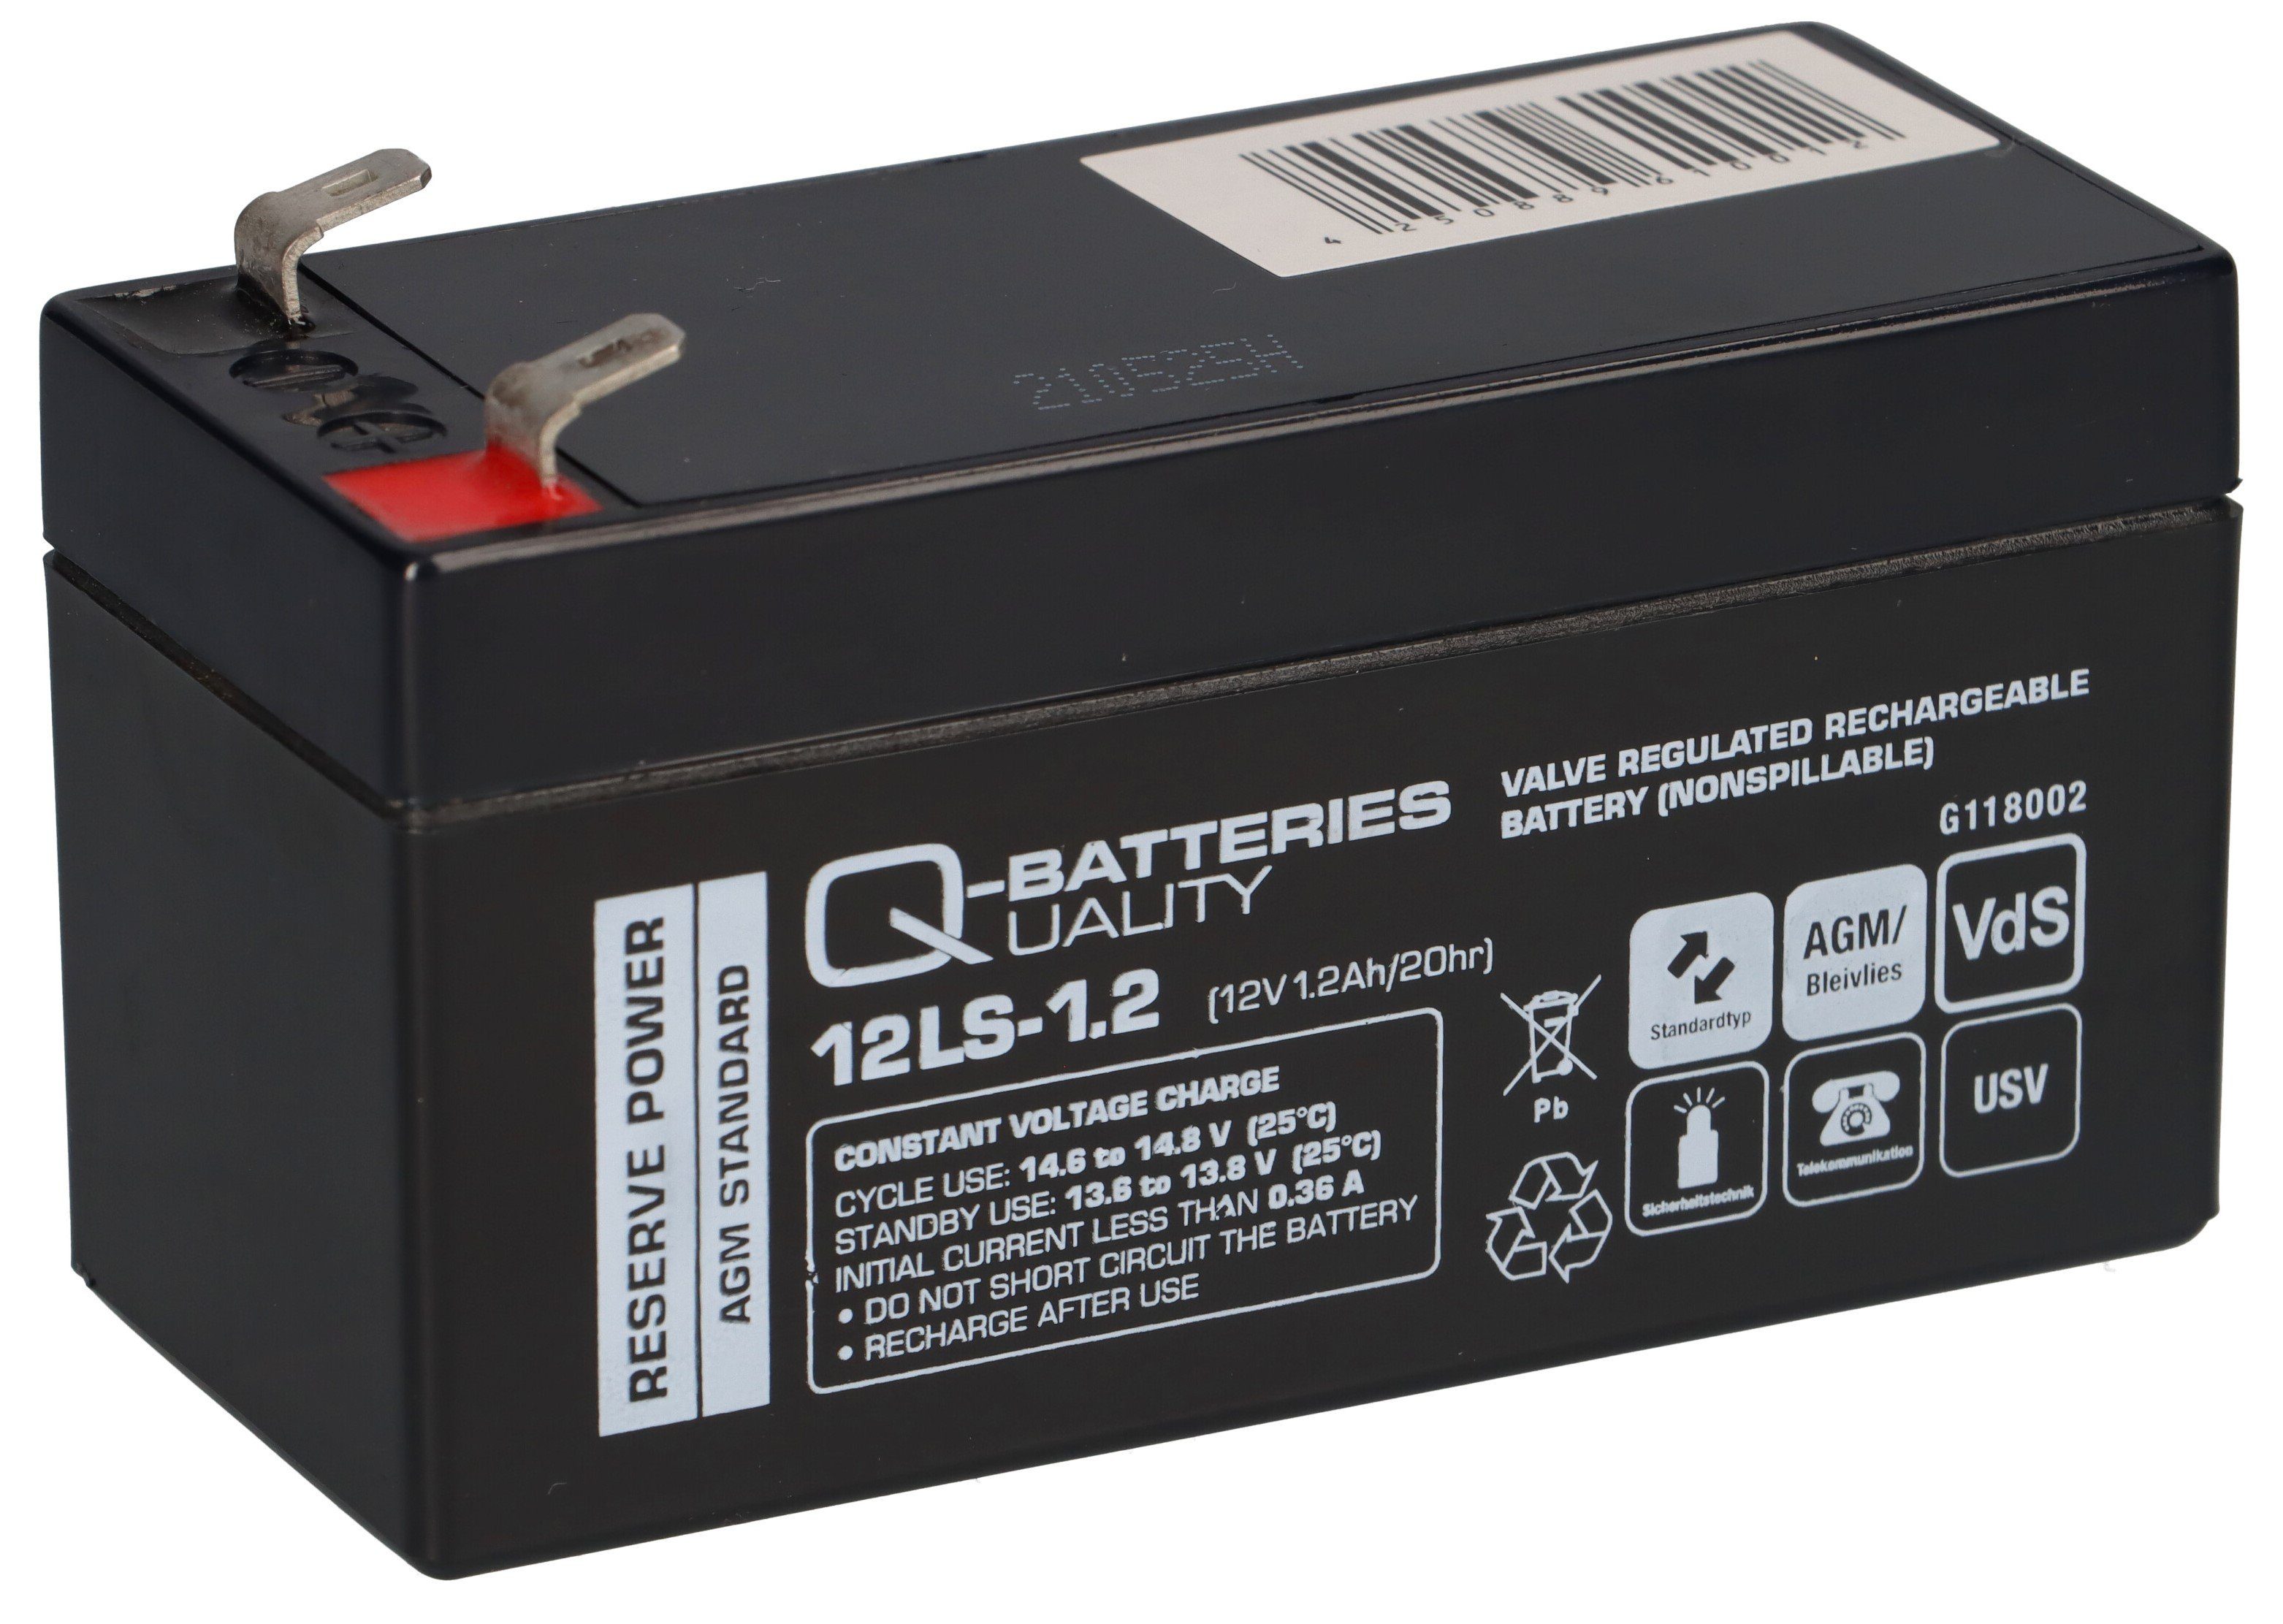 Q-Batteries Q-Batteries 12LS-1.2 12V 1,2Ah Blei-Vlies Akku / AGM VRLA mit VdS Bleiakkus